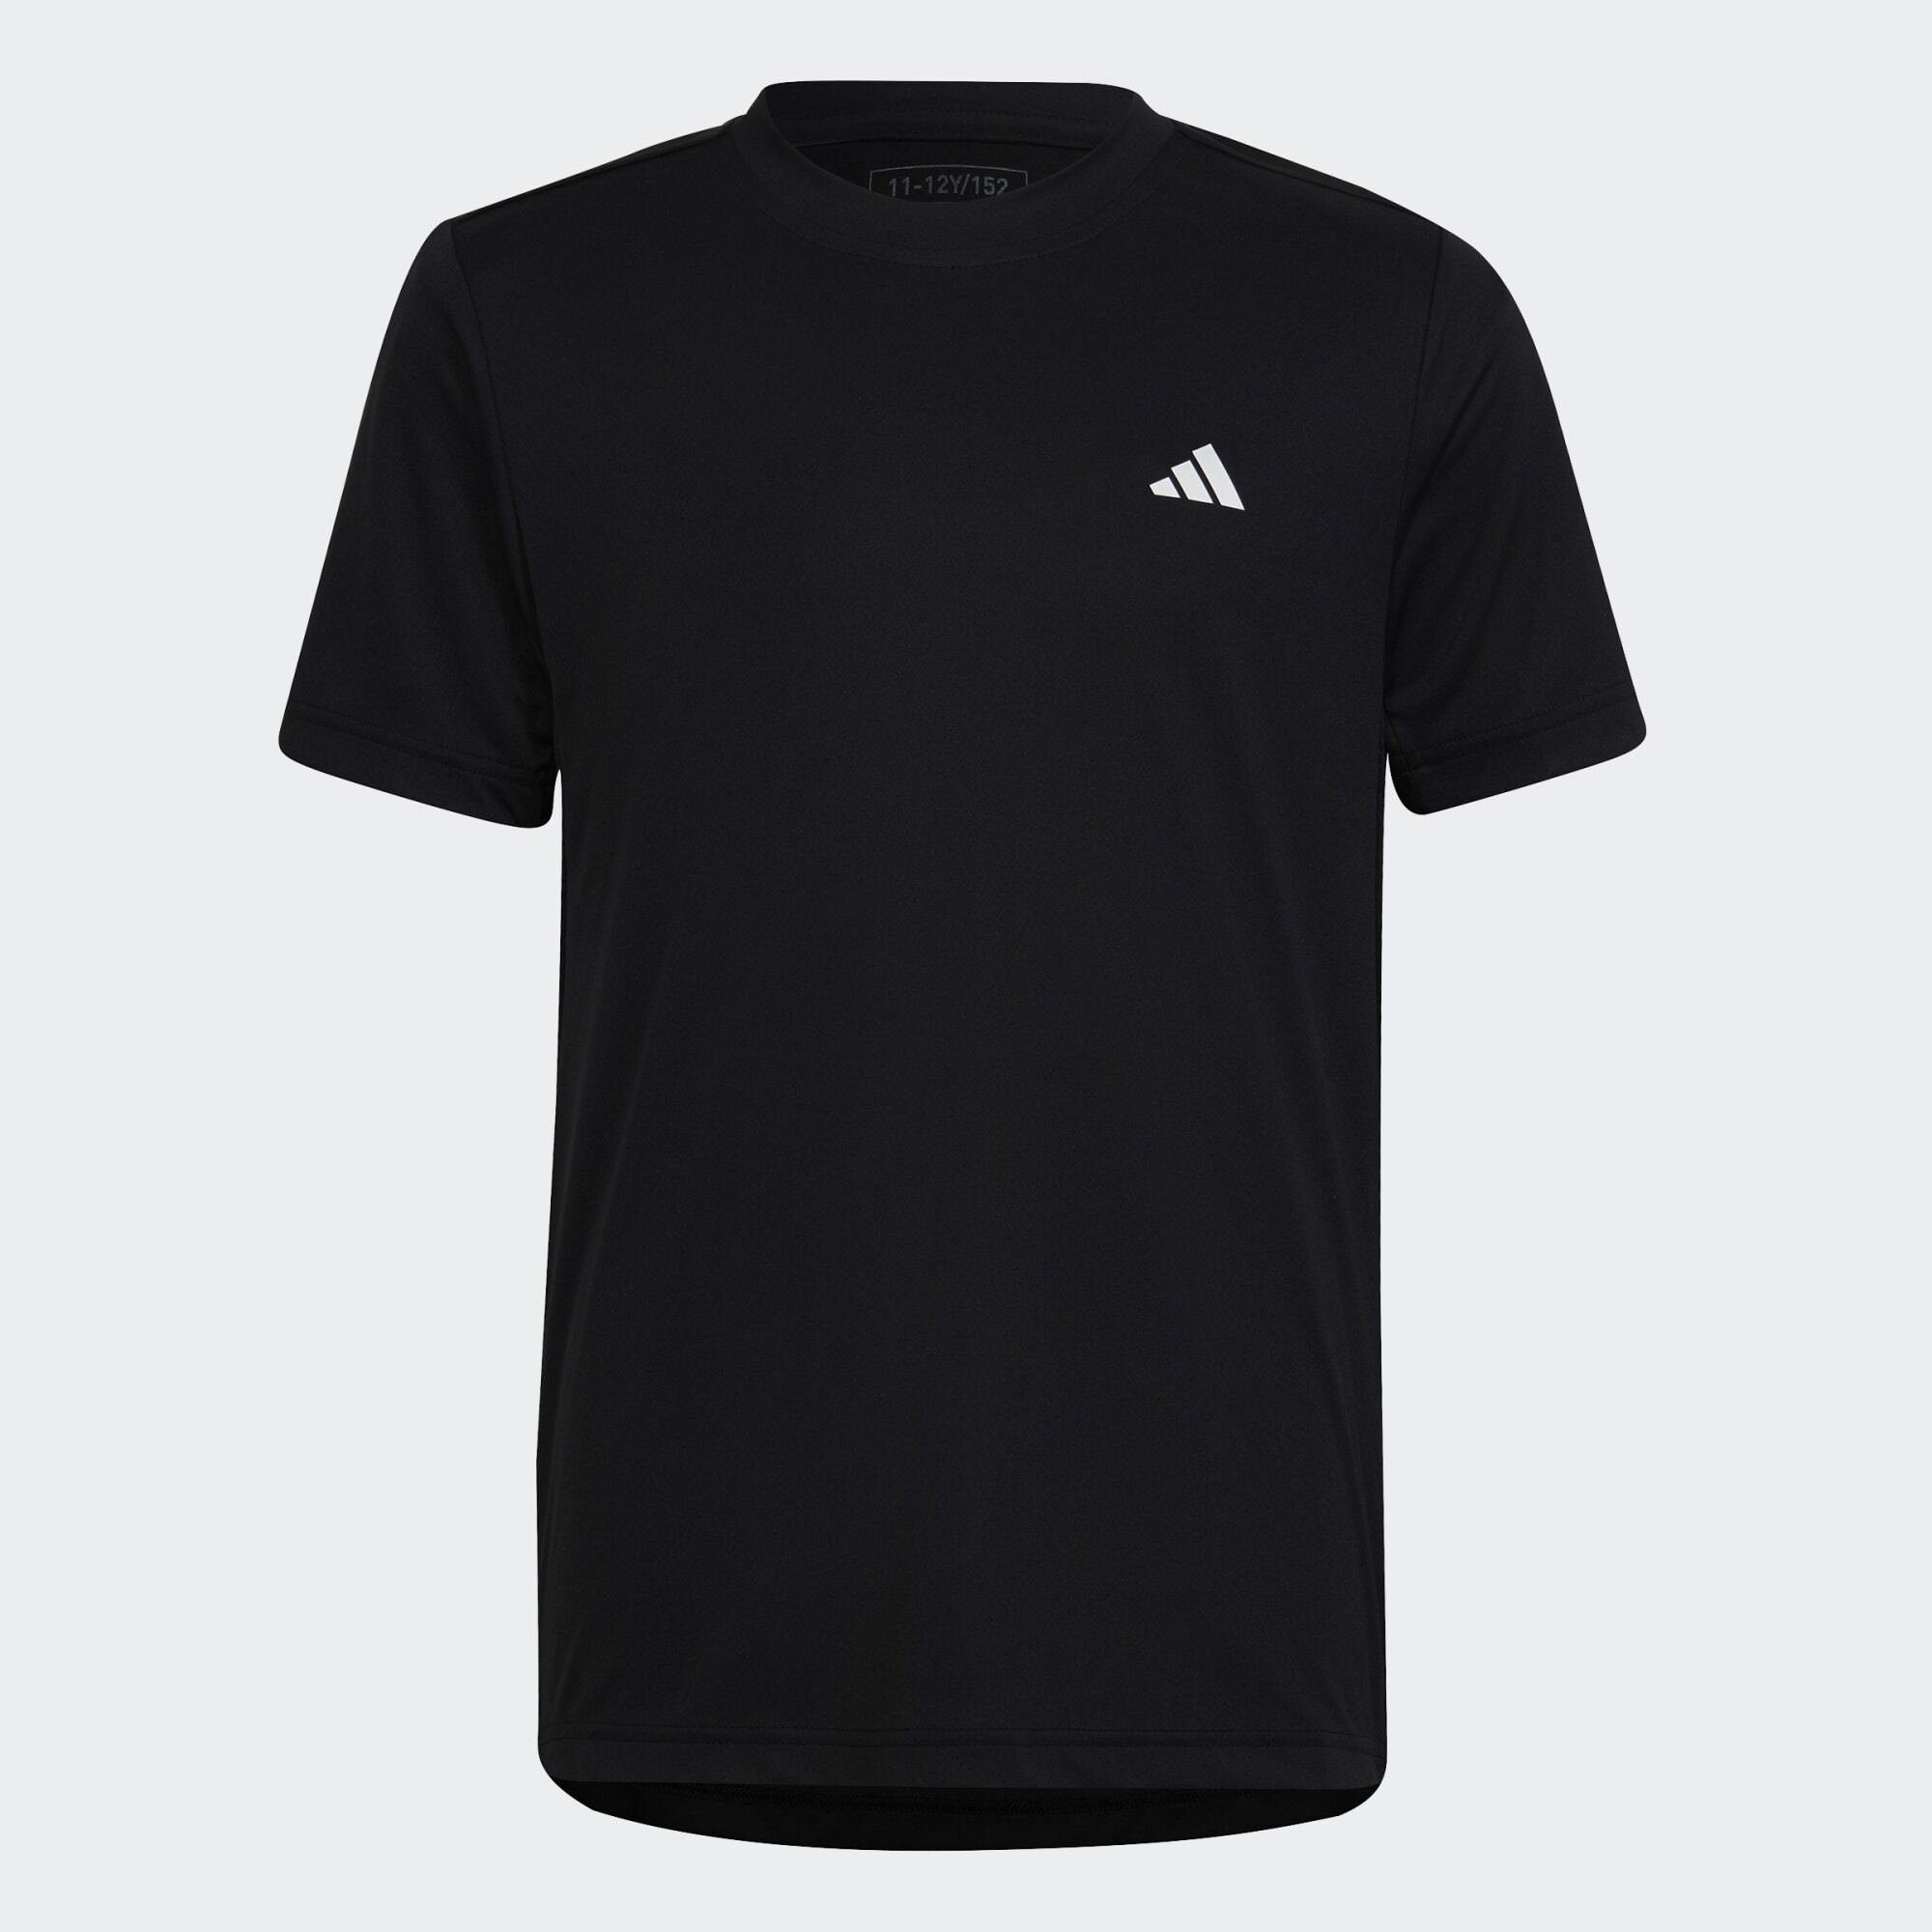 TENNIS CLUB T-SHIRT adidas Performance Black Funktionsshirt